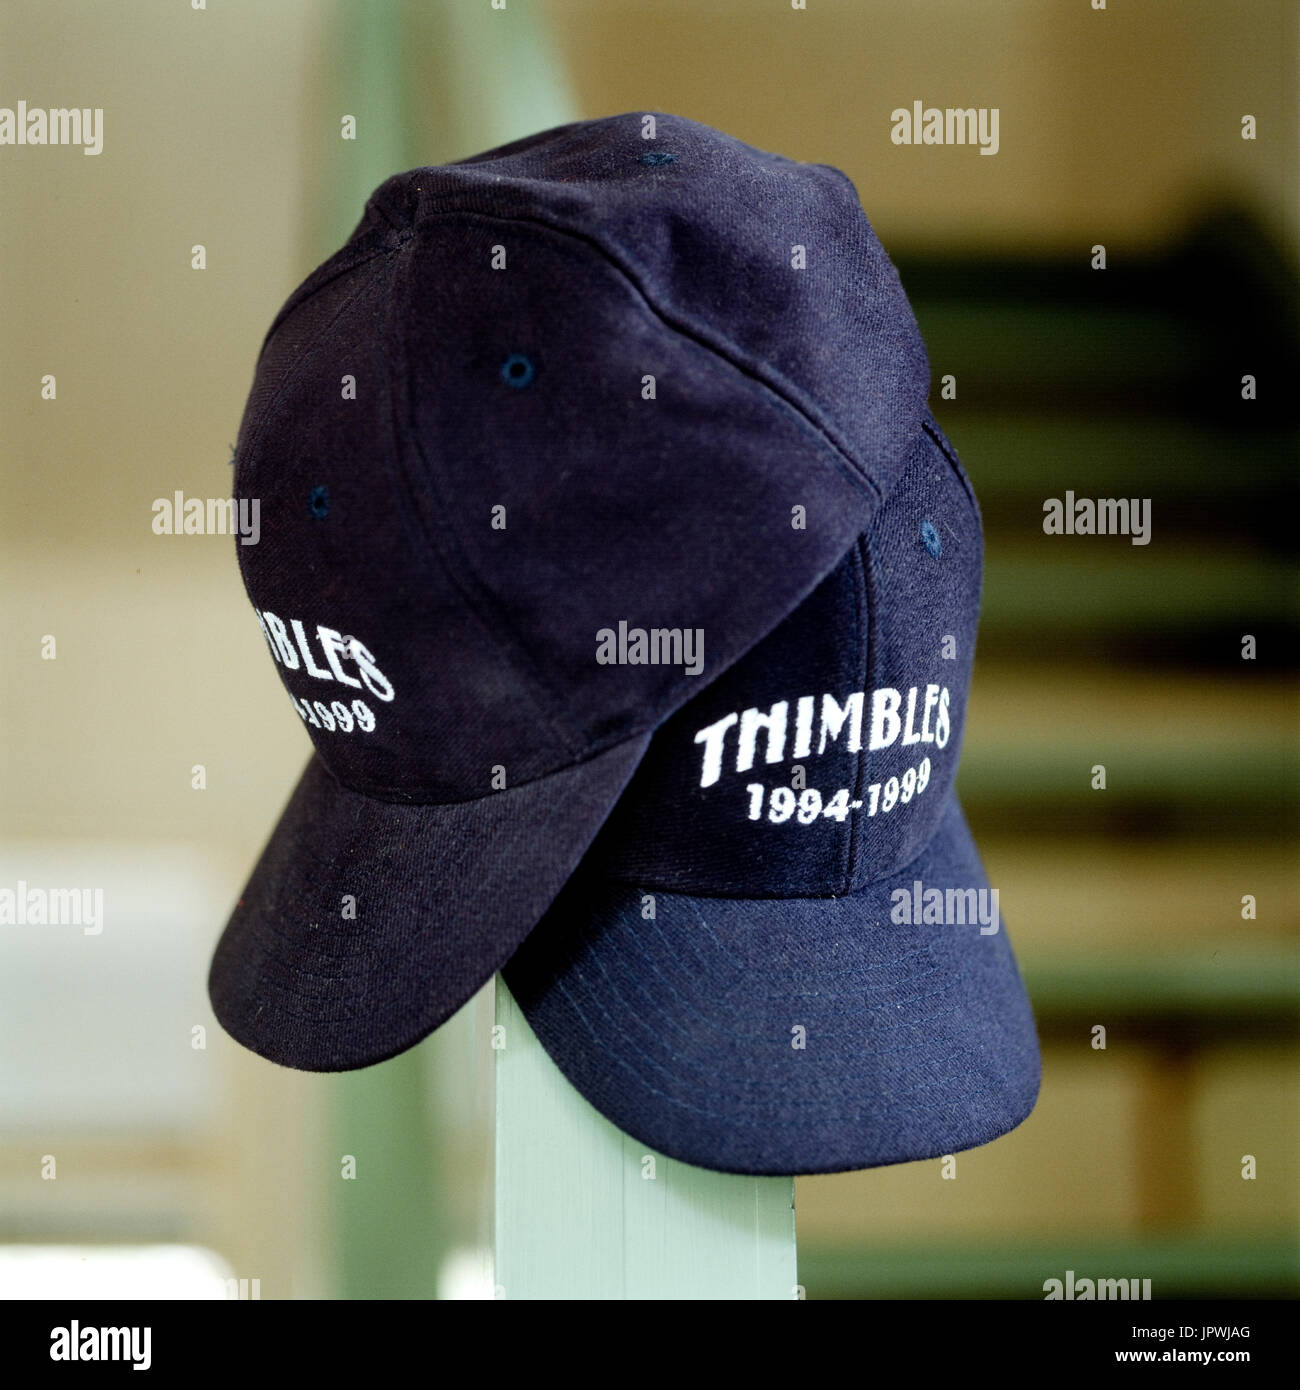 Blue Thimbles caps Stock Photo